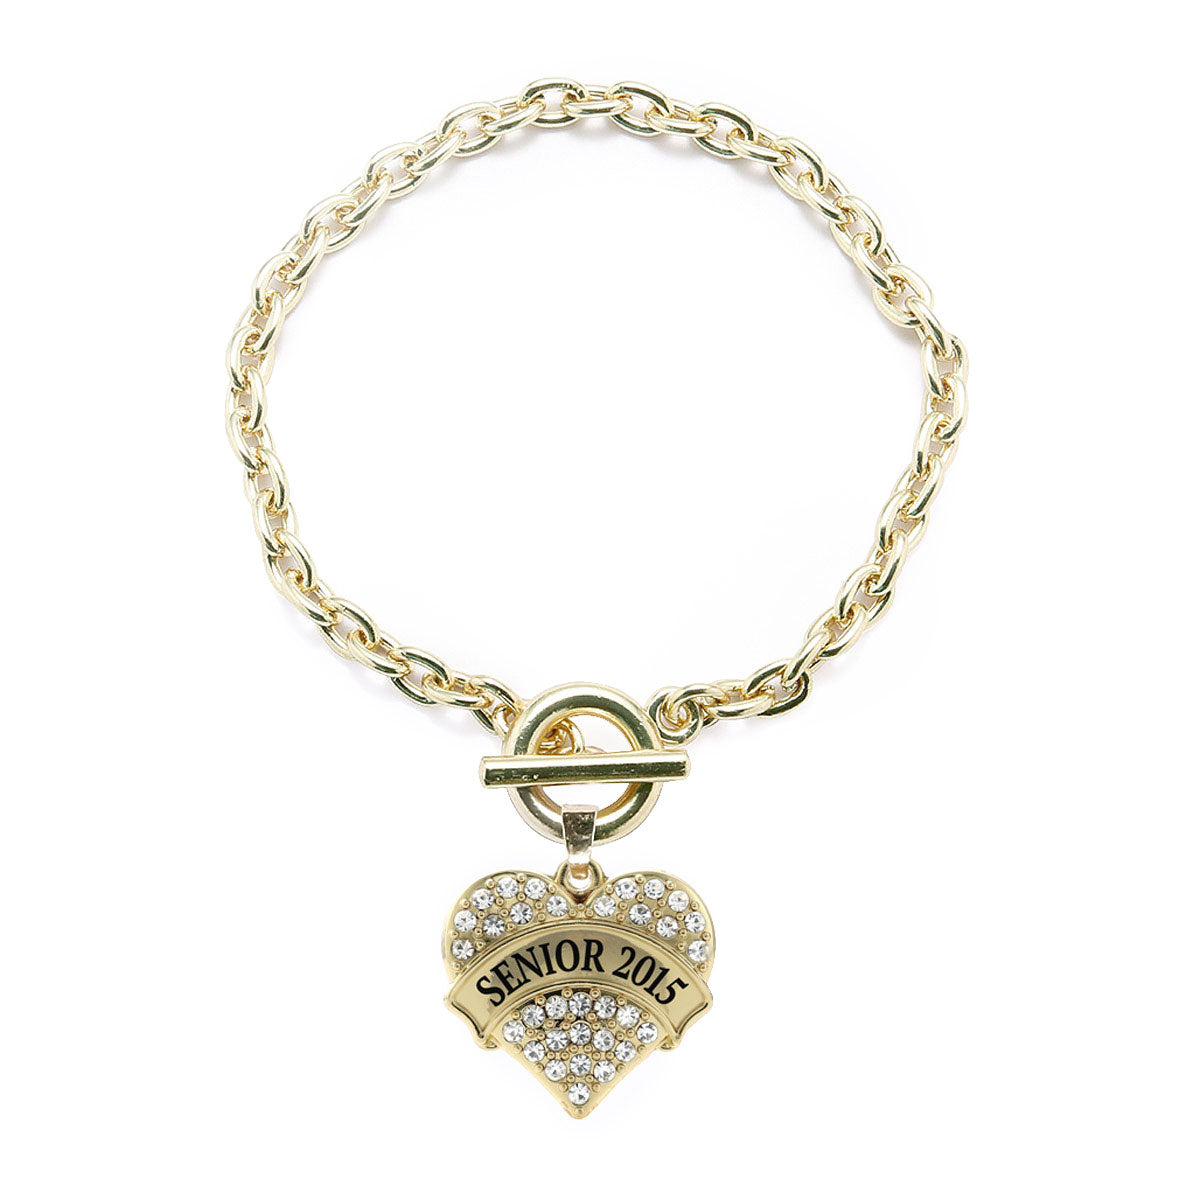 Gold Senior 2015 Pave Heart Charm Toggle Bracelet